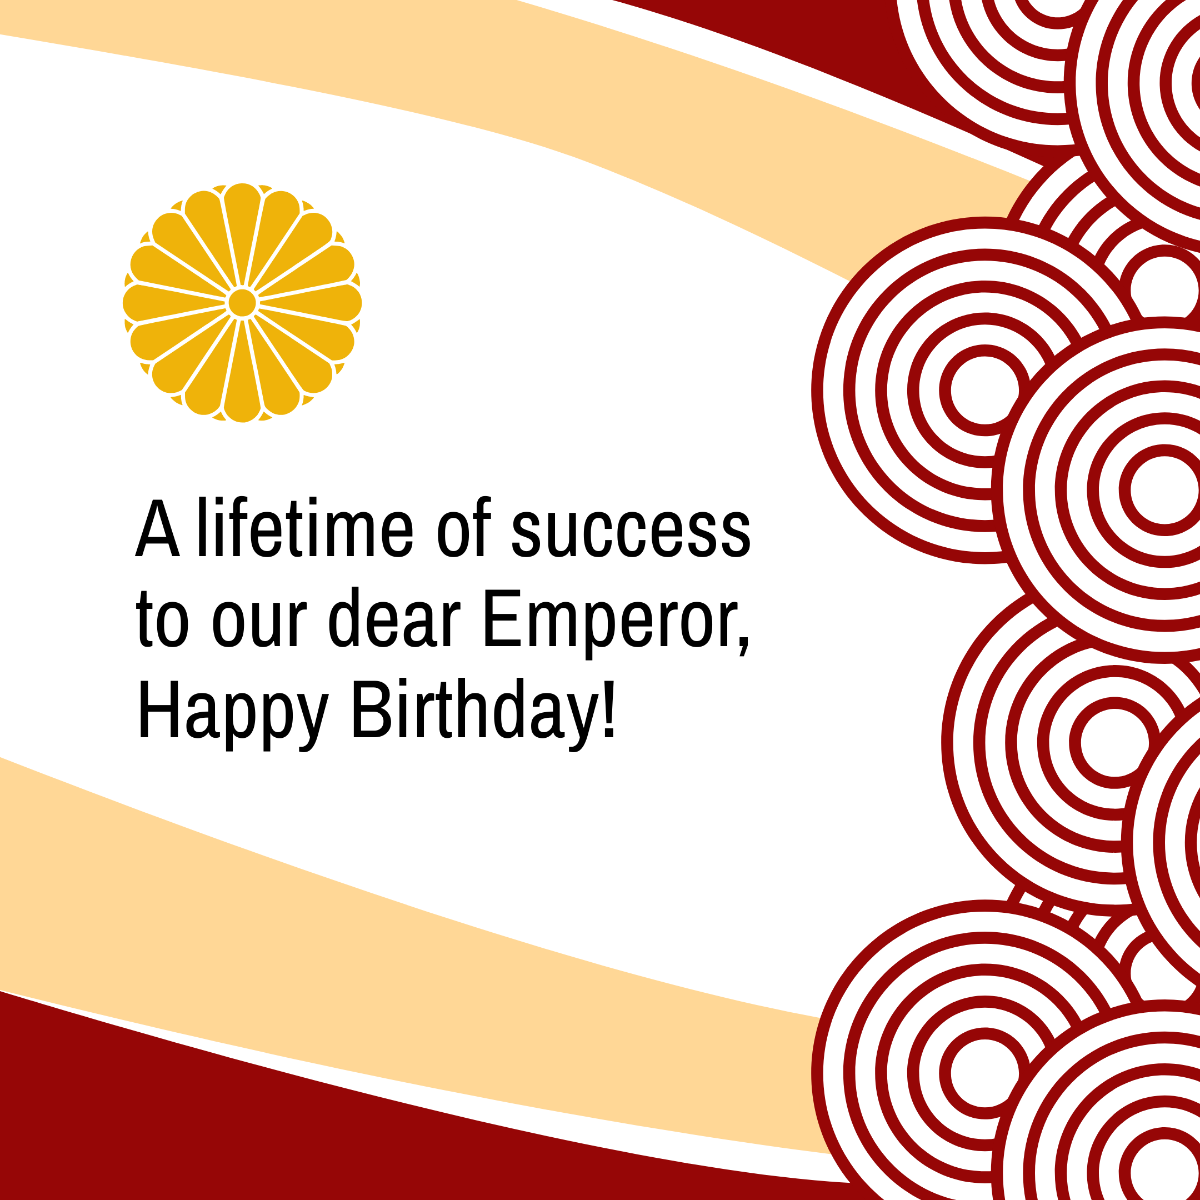 Emperor's Birthday Wishes Vector Template